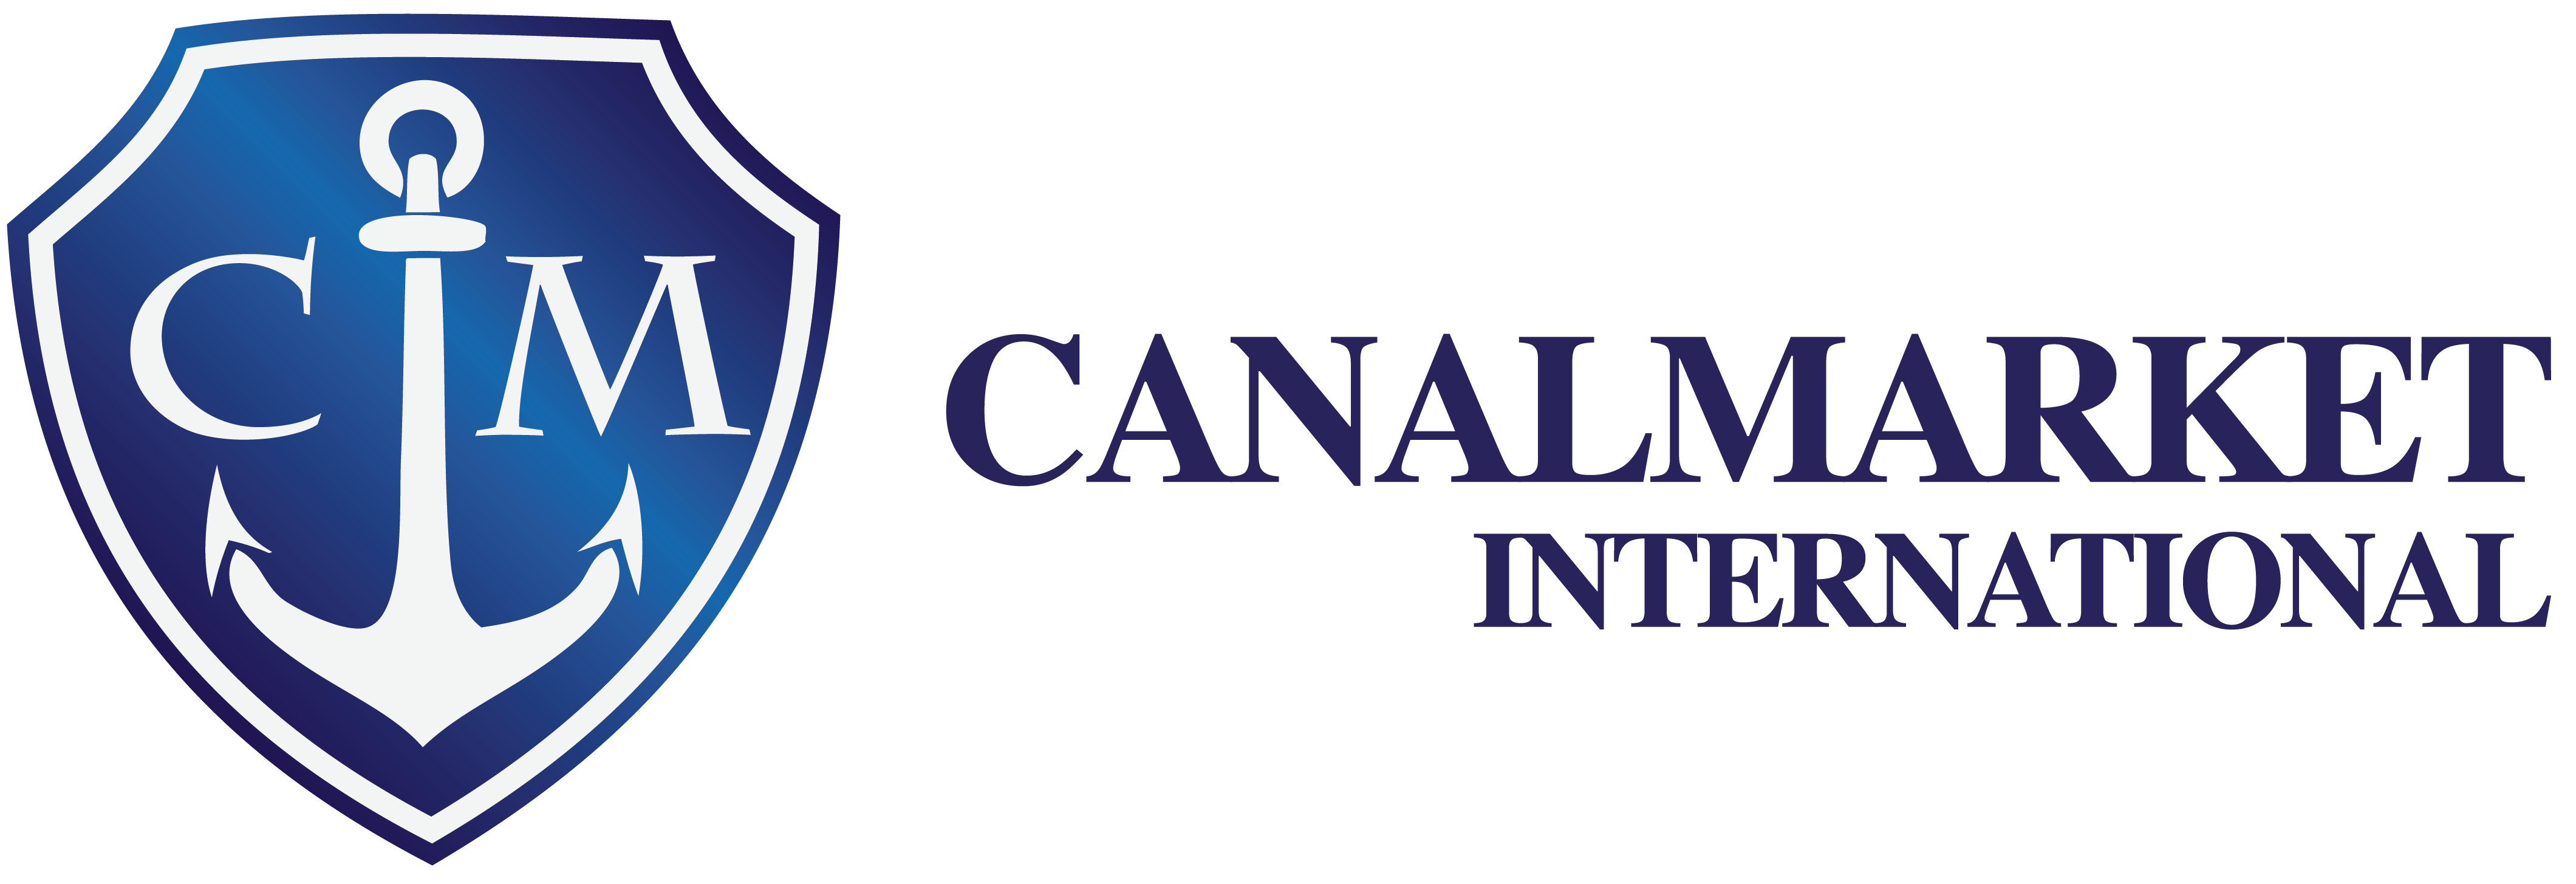 Canalmarket International